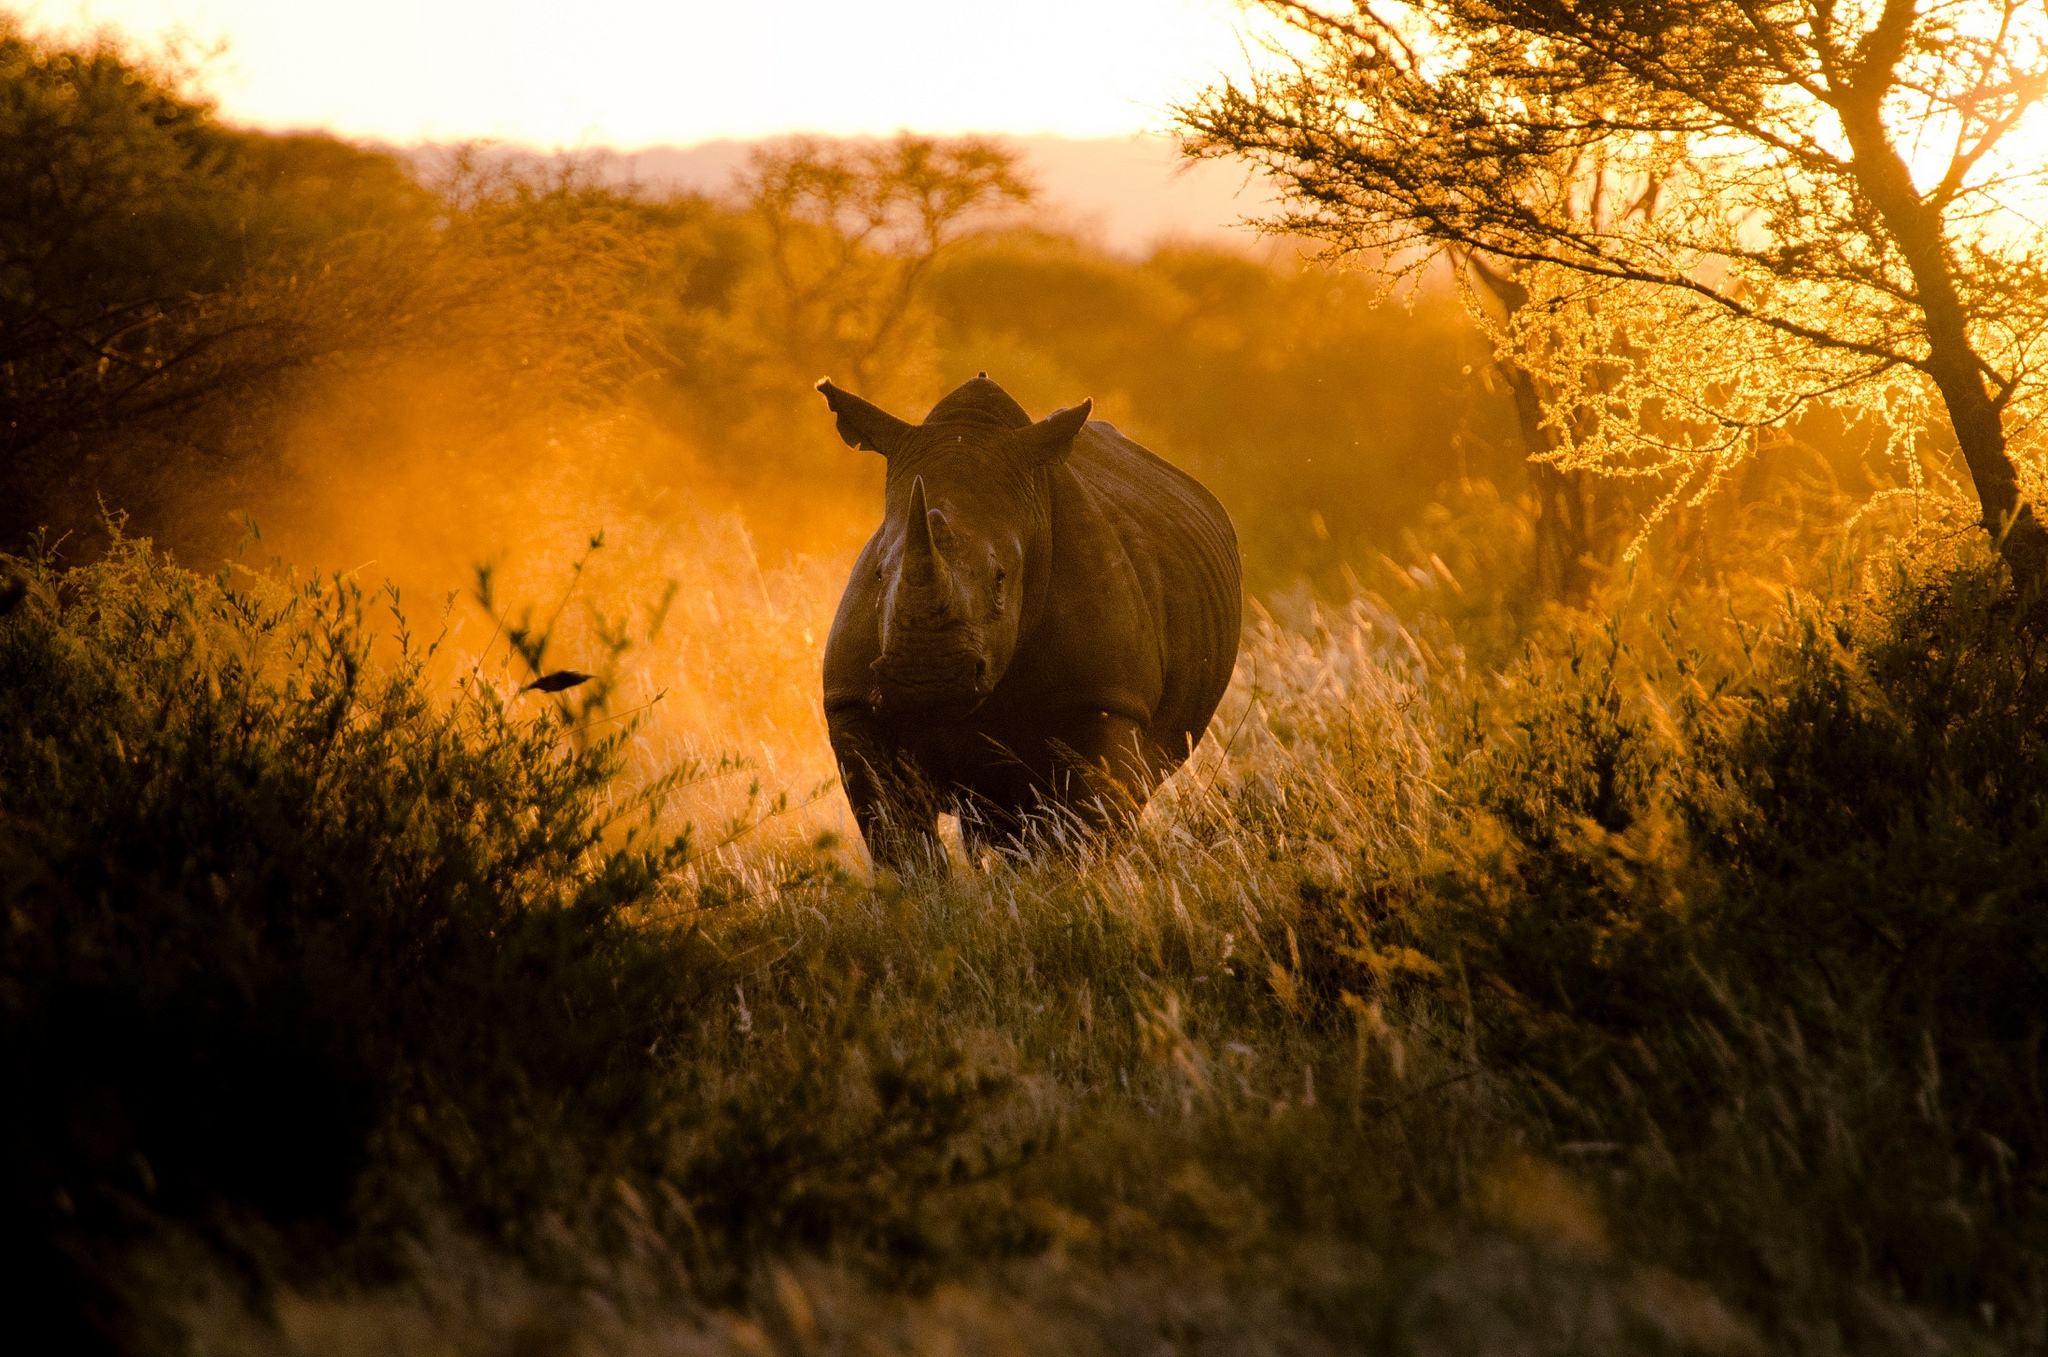 fond d'écran afrika,rhinocéros,faune,rhinocéros noir,rhinocéros blanc,safari